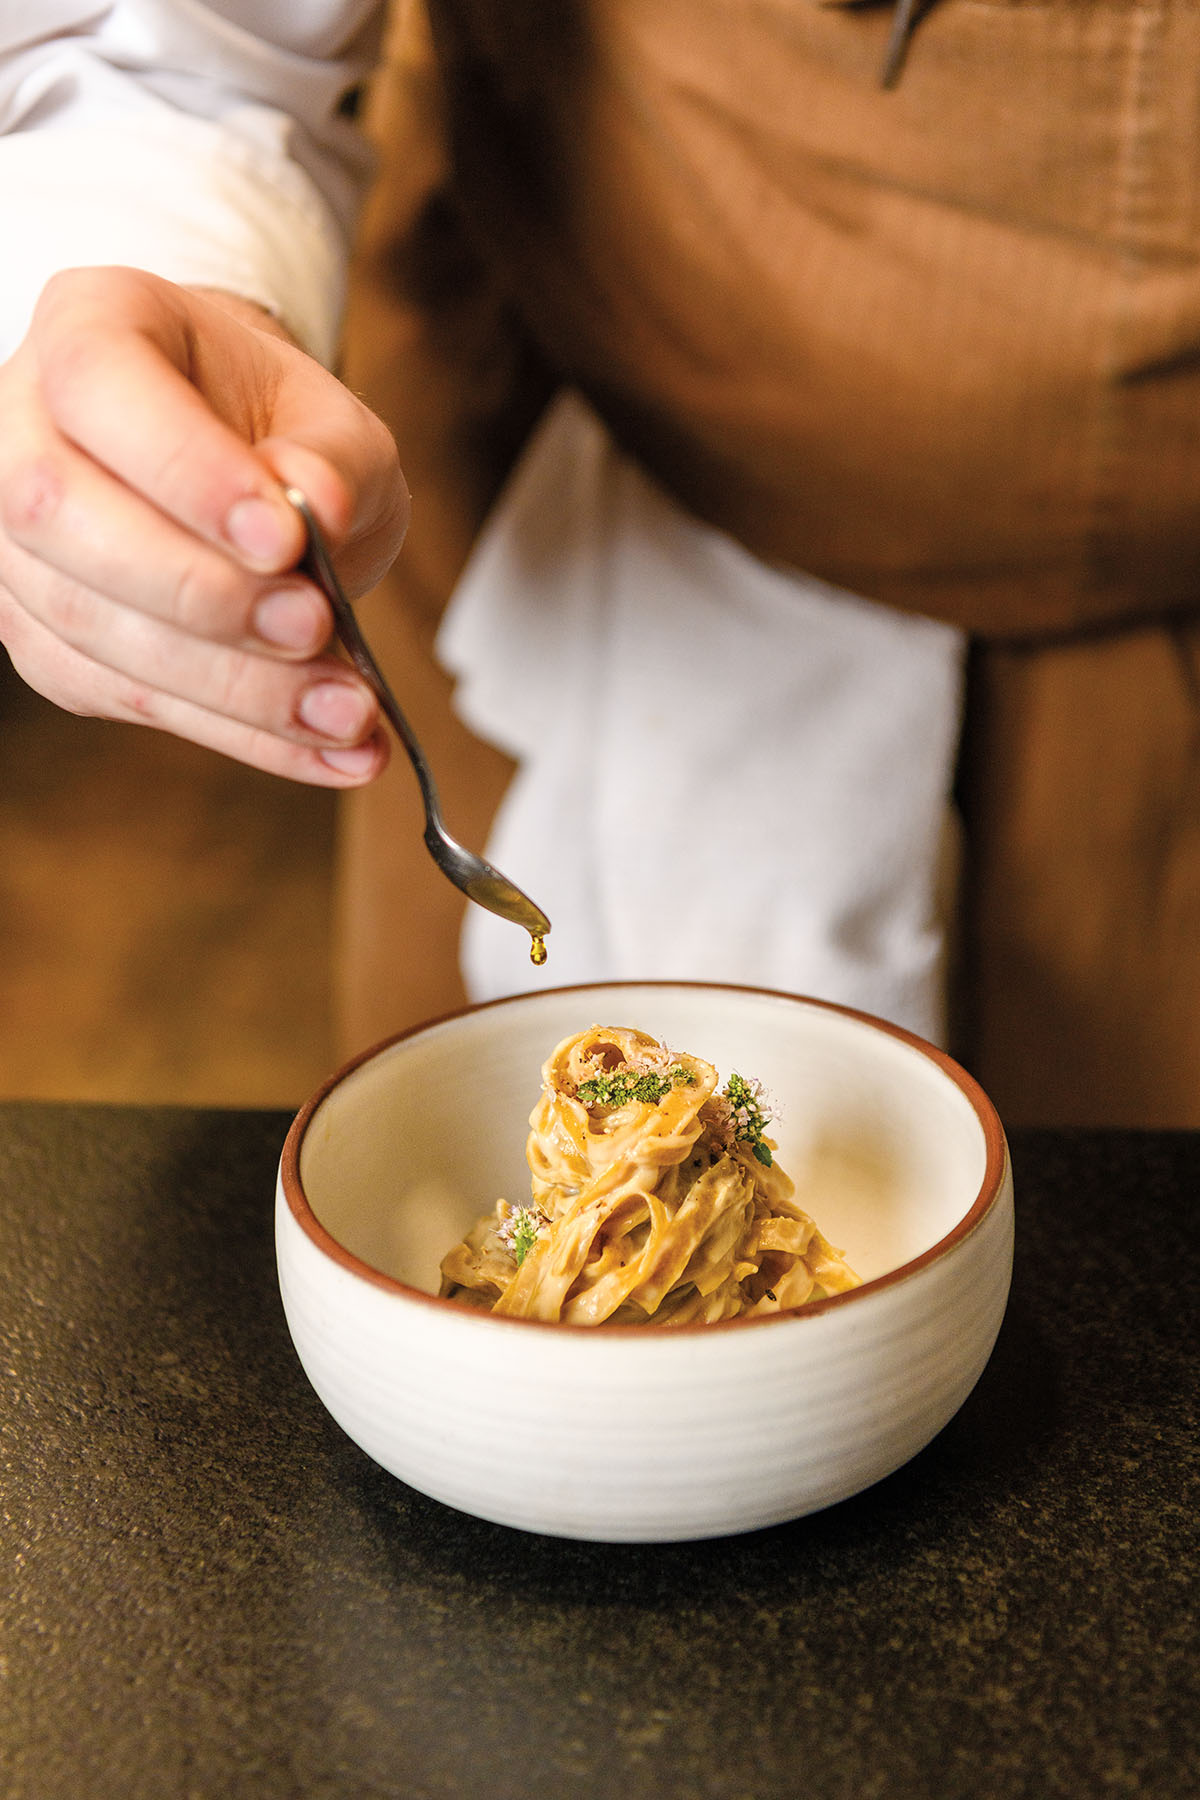 A person in a tan apron carefully plates long golden pasta noodles